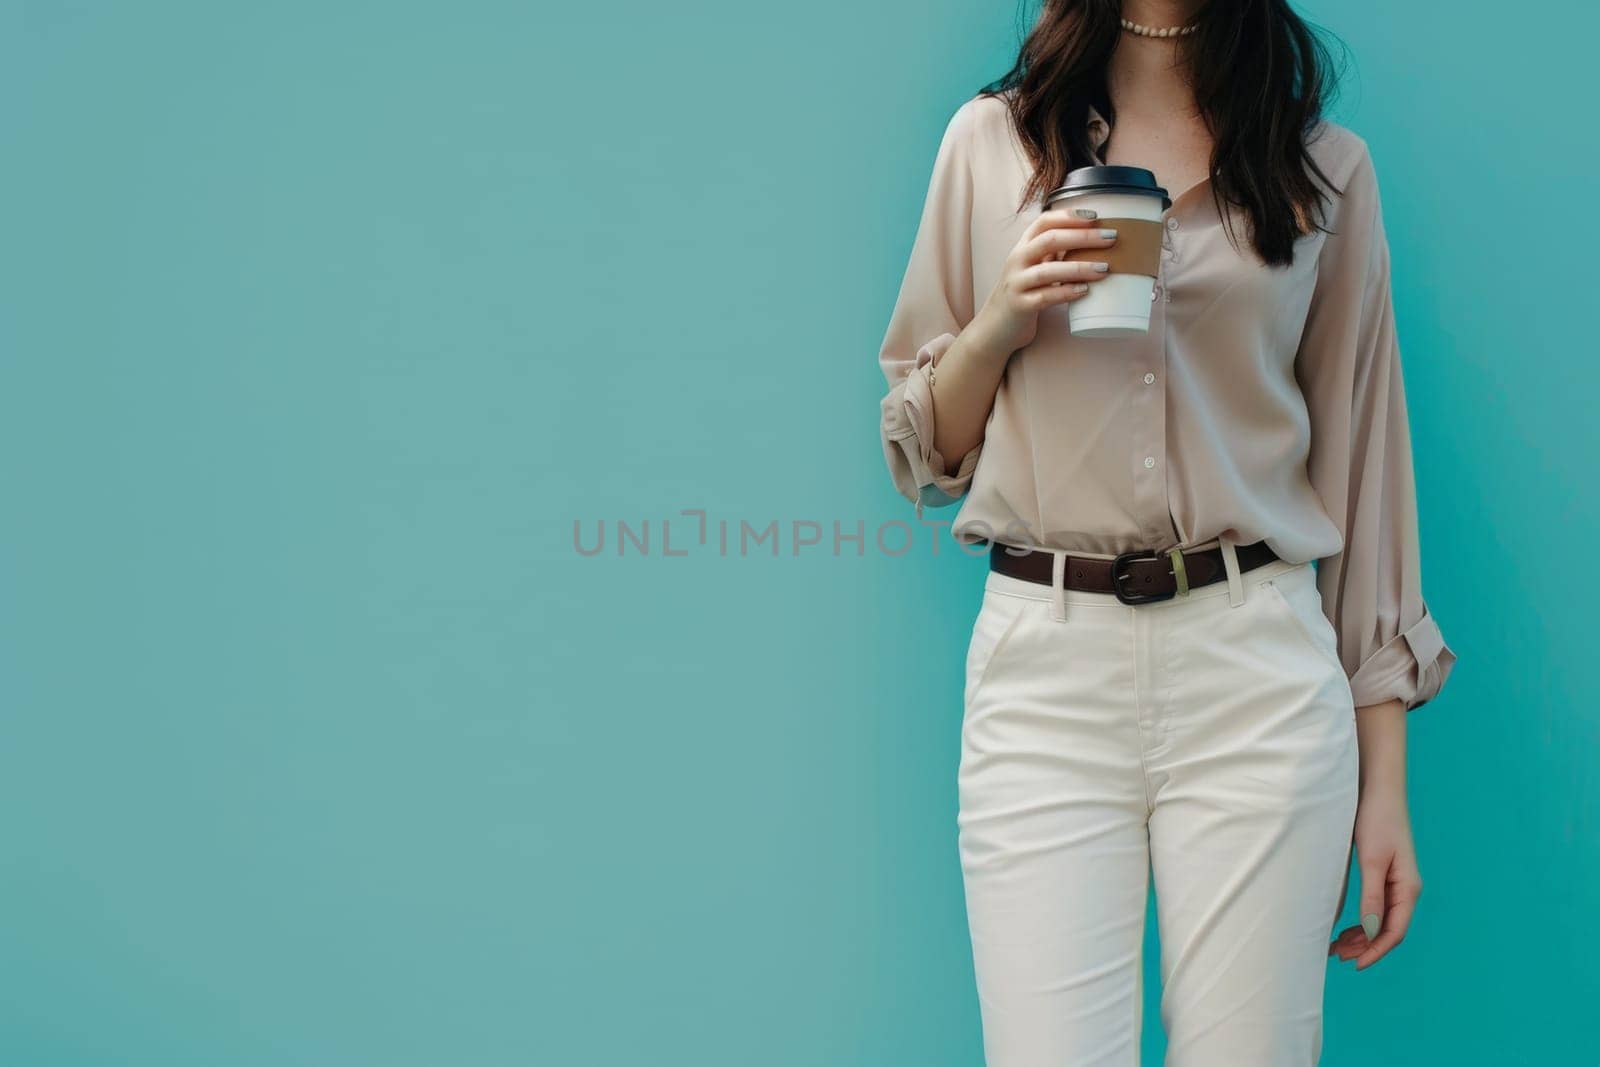 Photo of a business woman with a coffee with Copy space, mockup coffee cup, minimalist by nijieimu